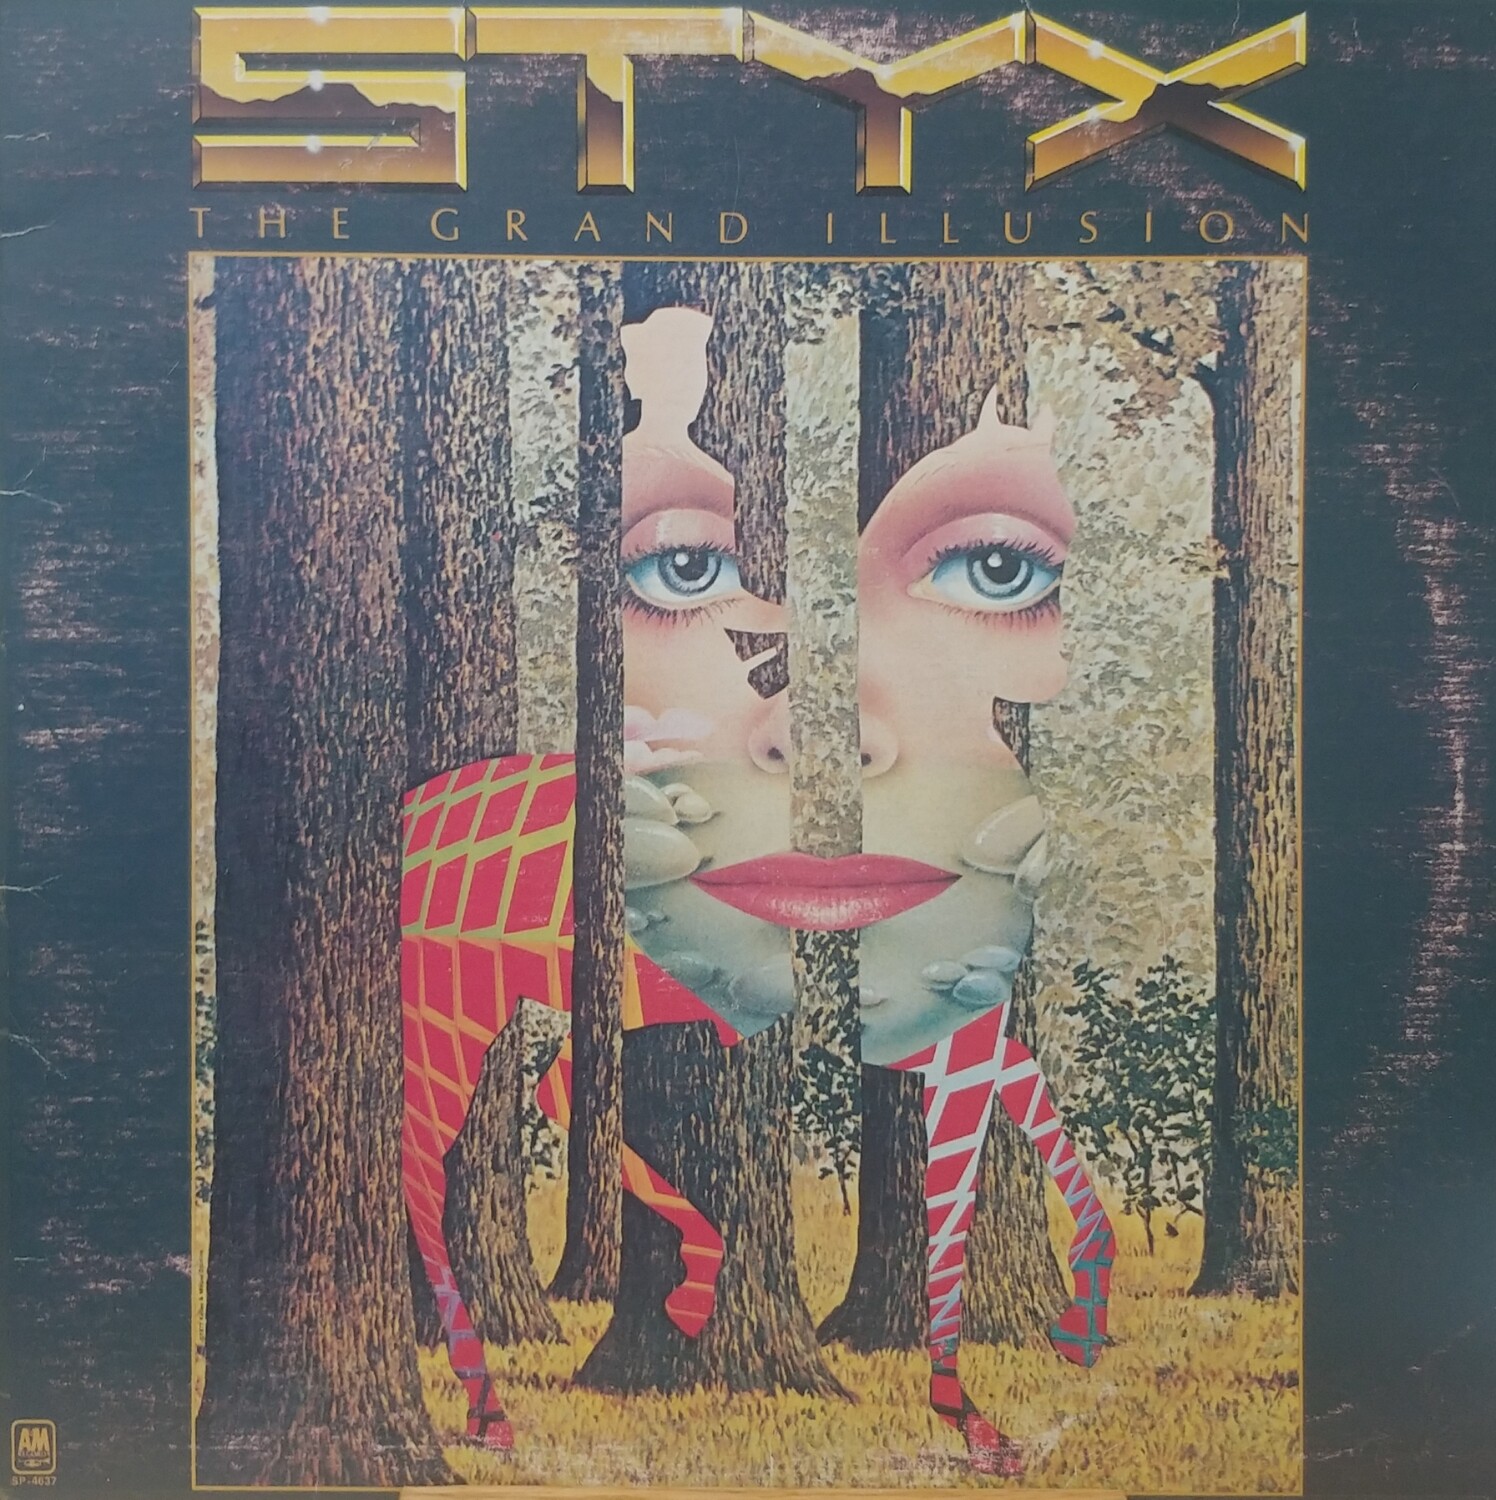 Styx - The grand illusion